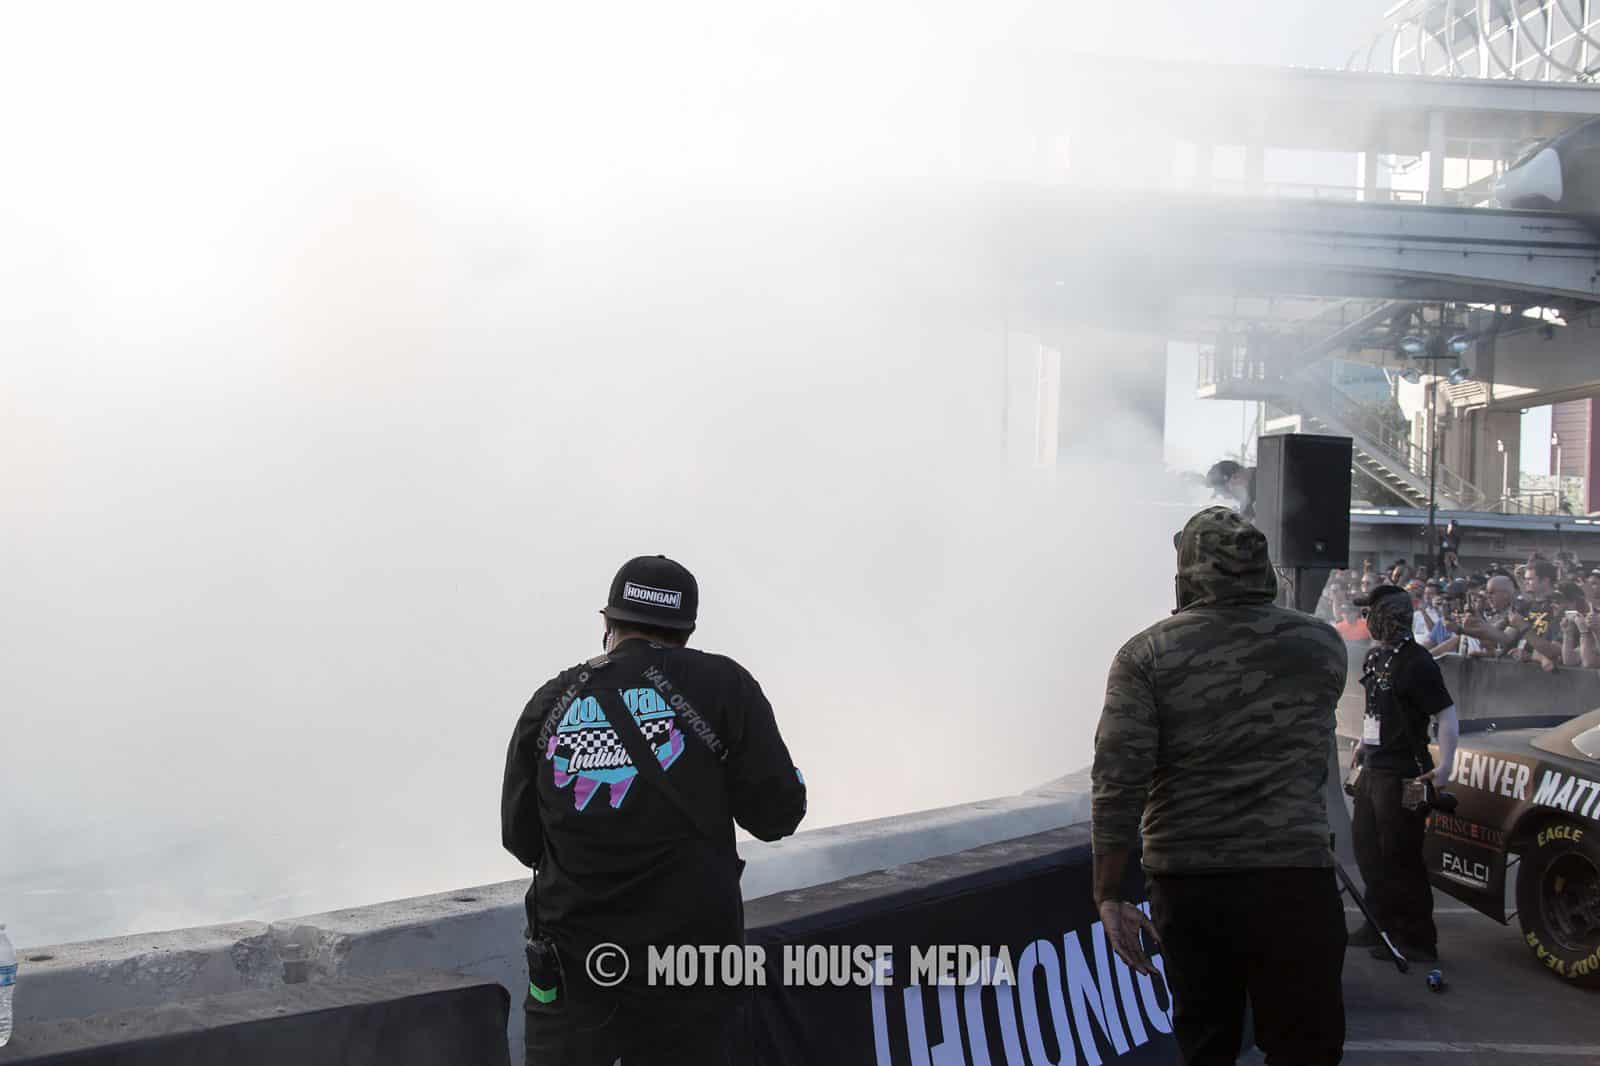 Peter Chrisikopoulos disappearing in tire smoke at the Hoonigan Sema Barnyard